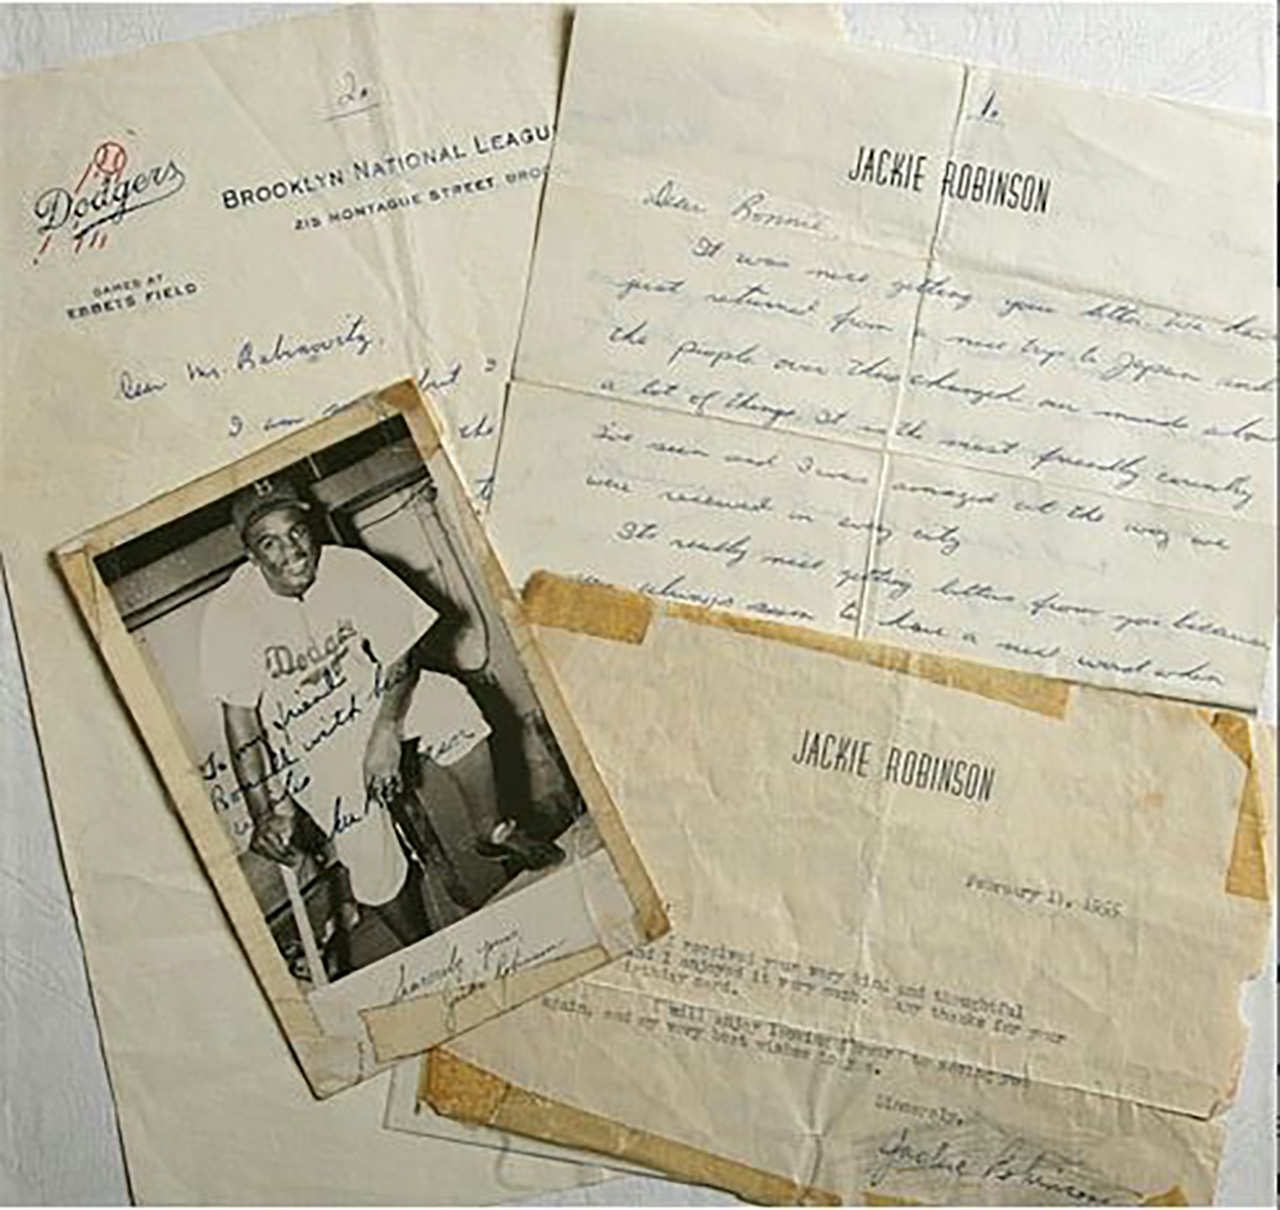 1969 "Jackie Robinson Baseball Dodgers" "Army v Navy  Football" clipping 7x4”